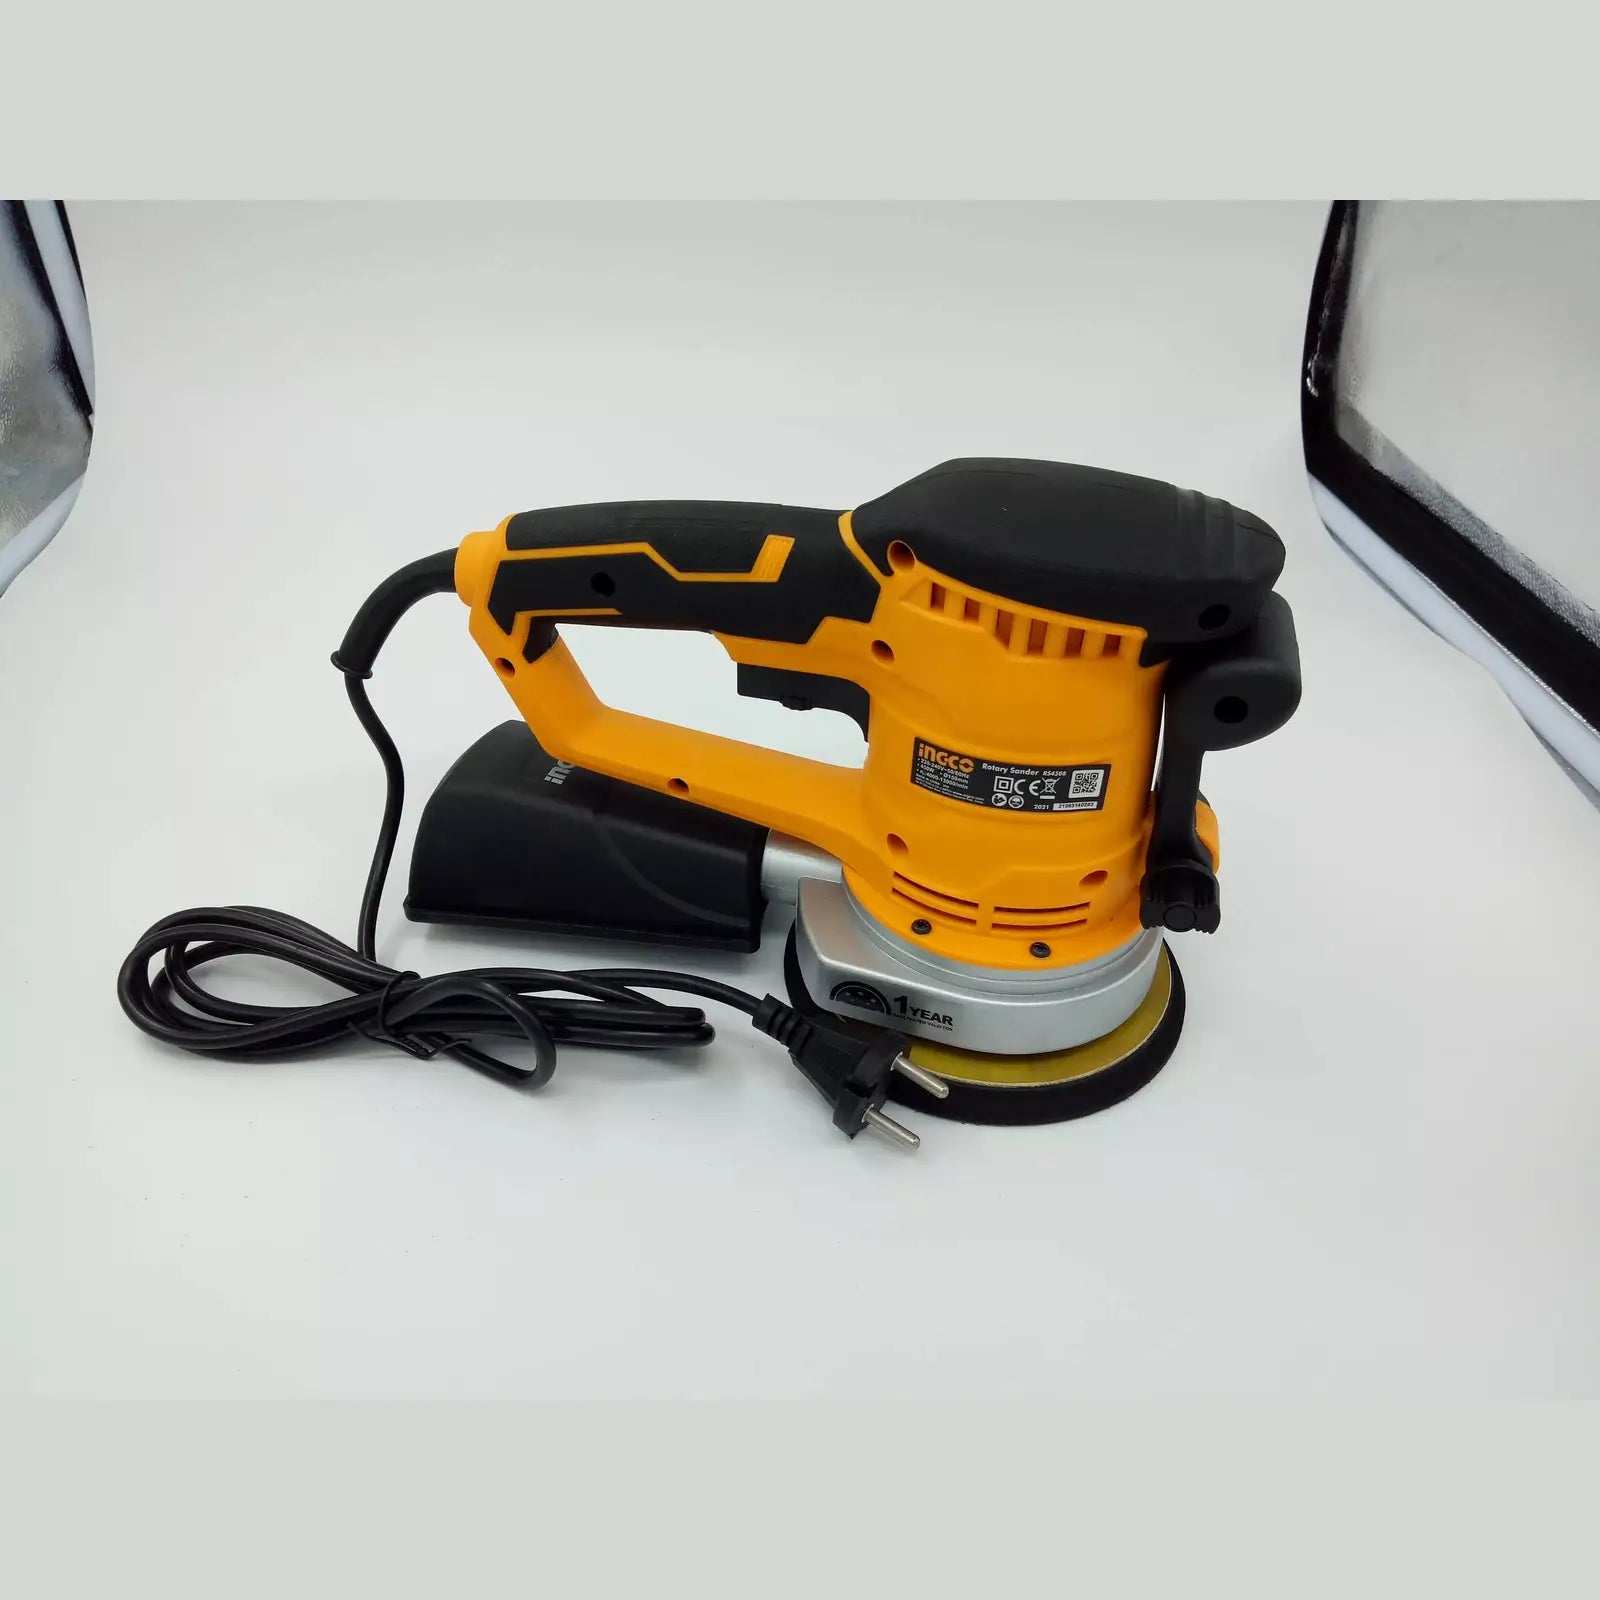 Ingco 450W Rotary Sander - RS4508 | Supply Master | Accra, Ghana Sander Buy Tools hardware Building materials